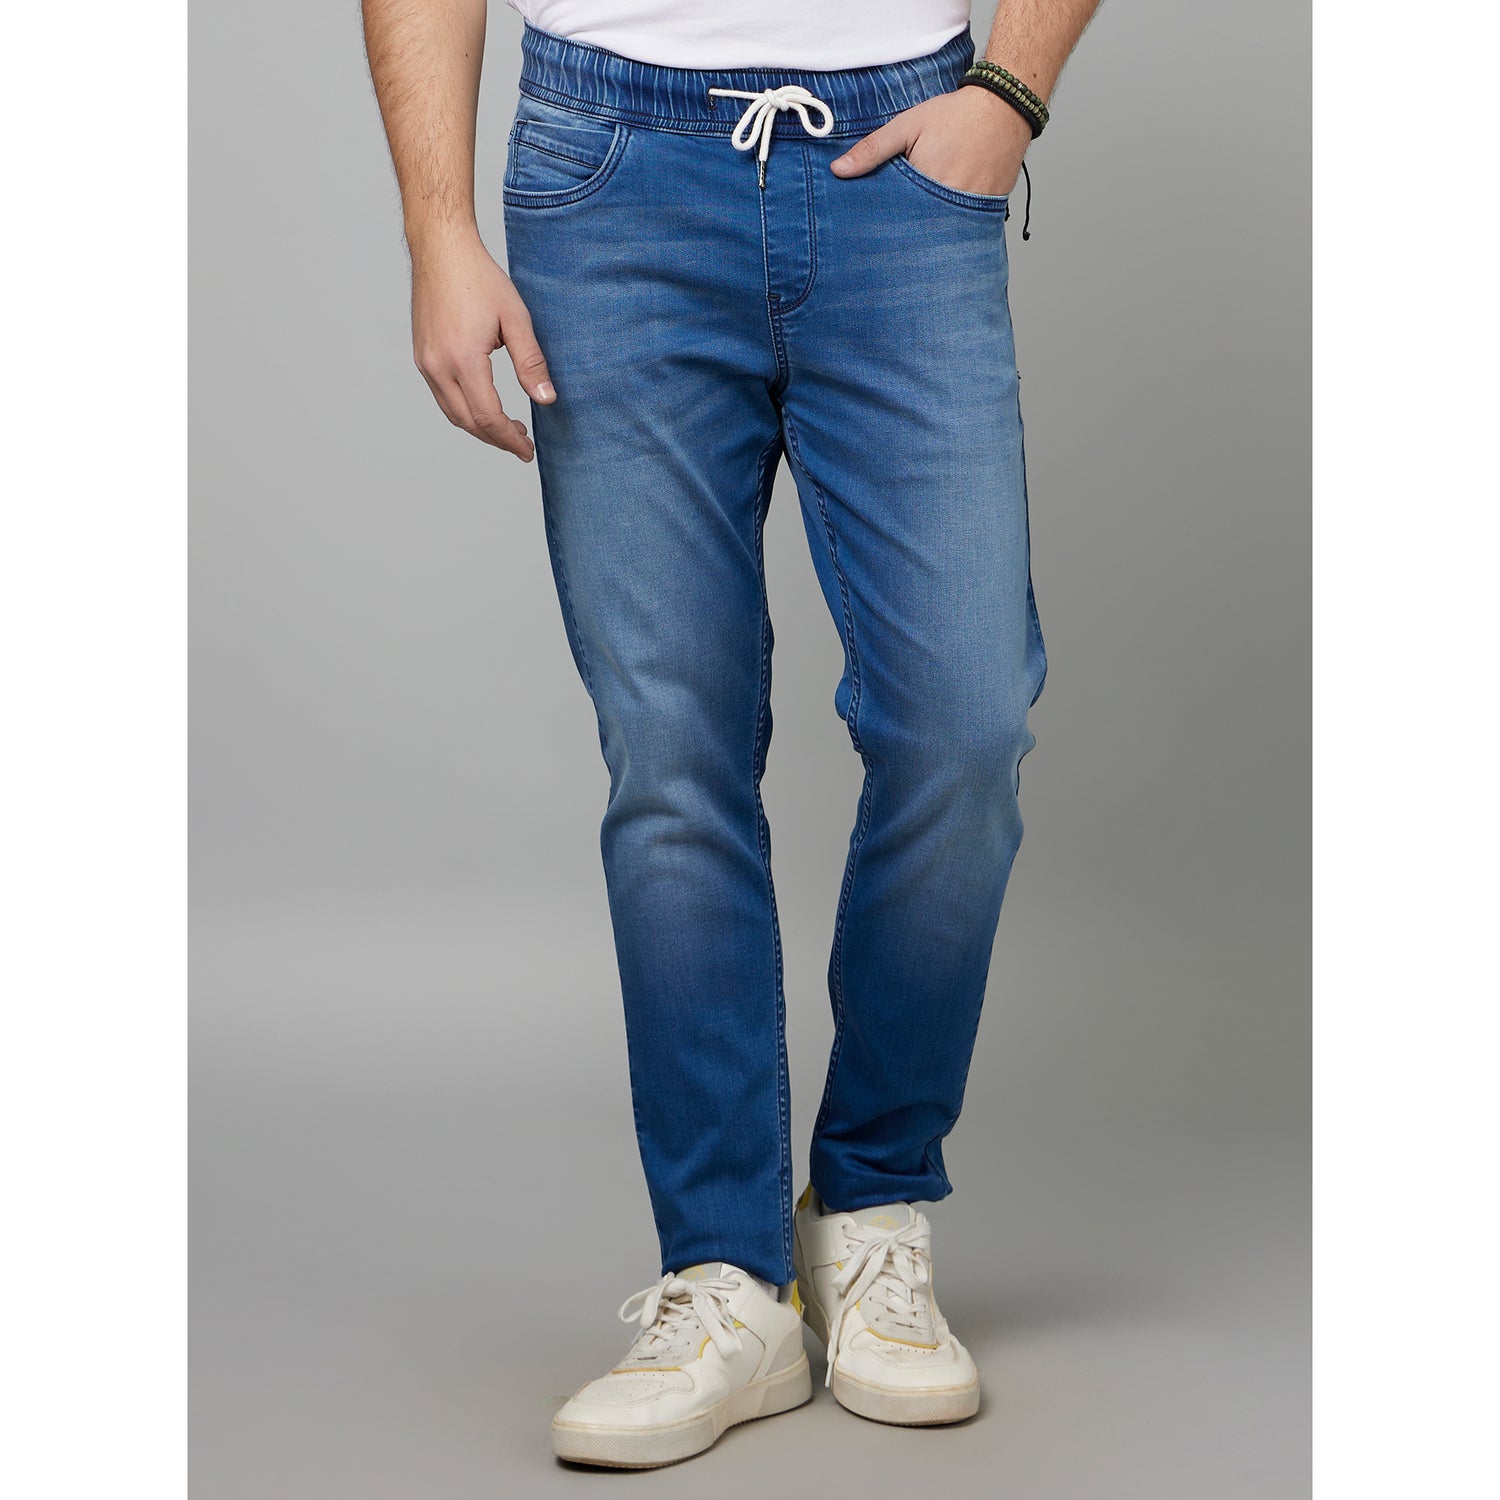 Blue Cotton Light Fade Jean Stretchable Jeans (FOJOGDEN)